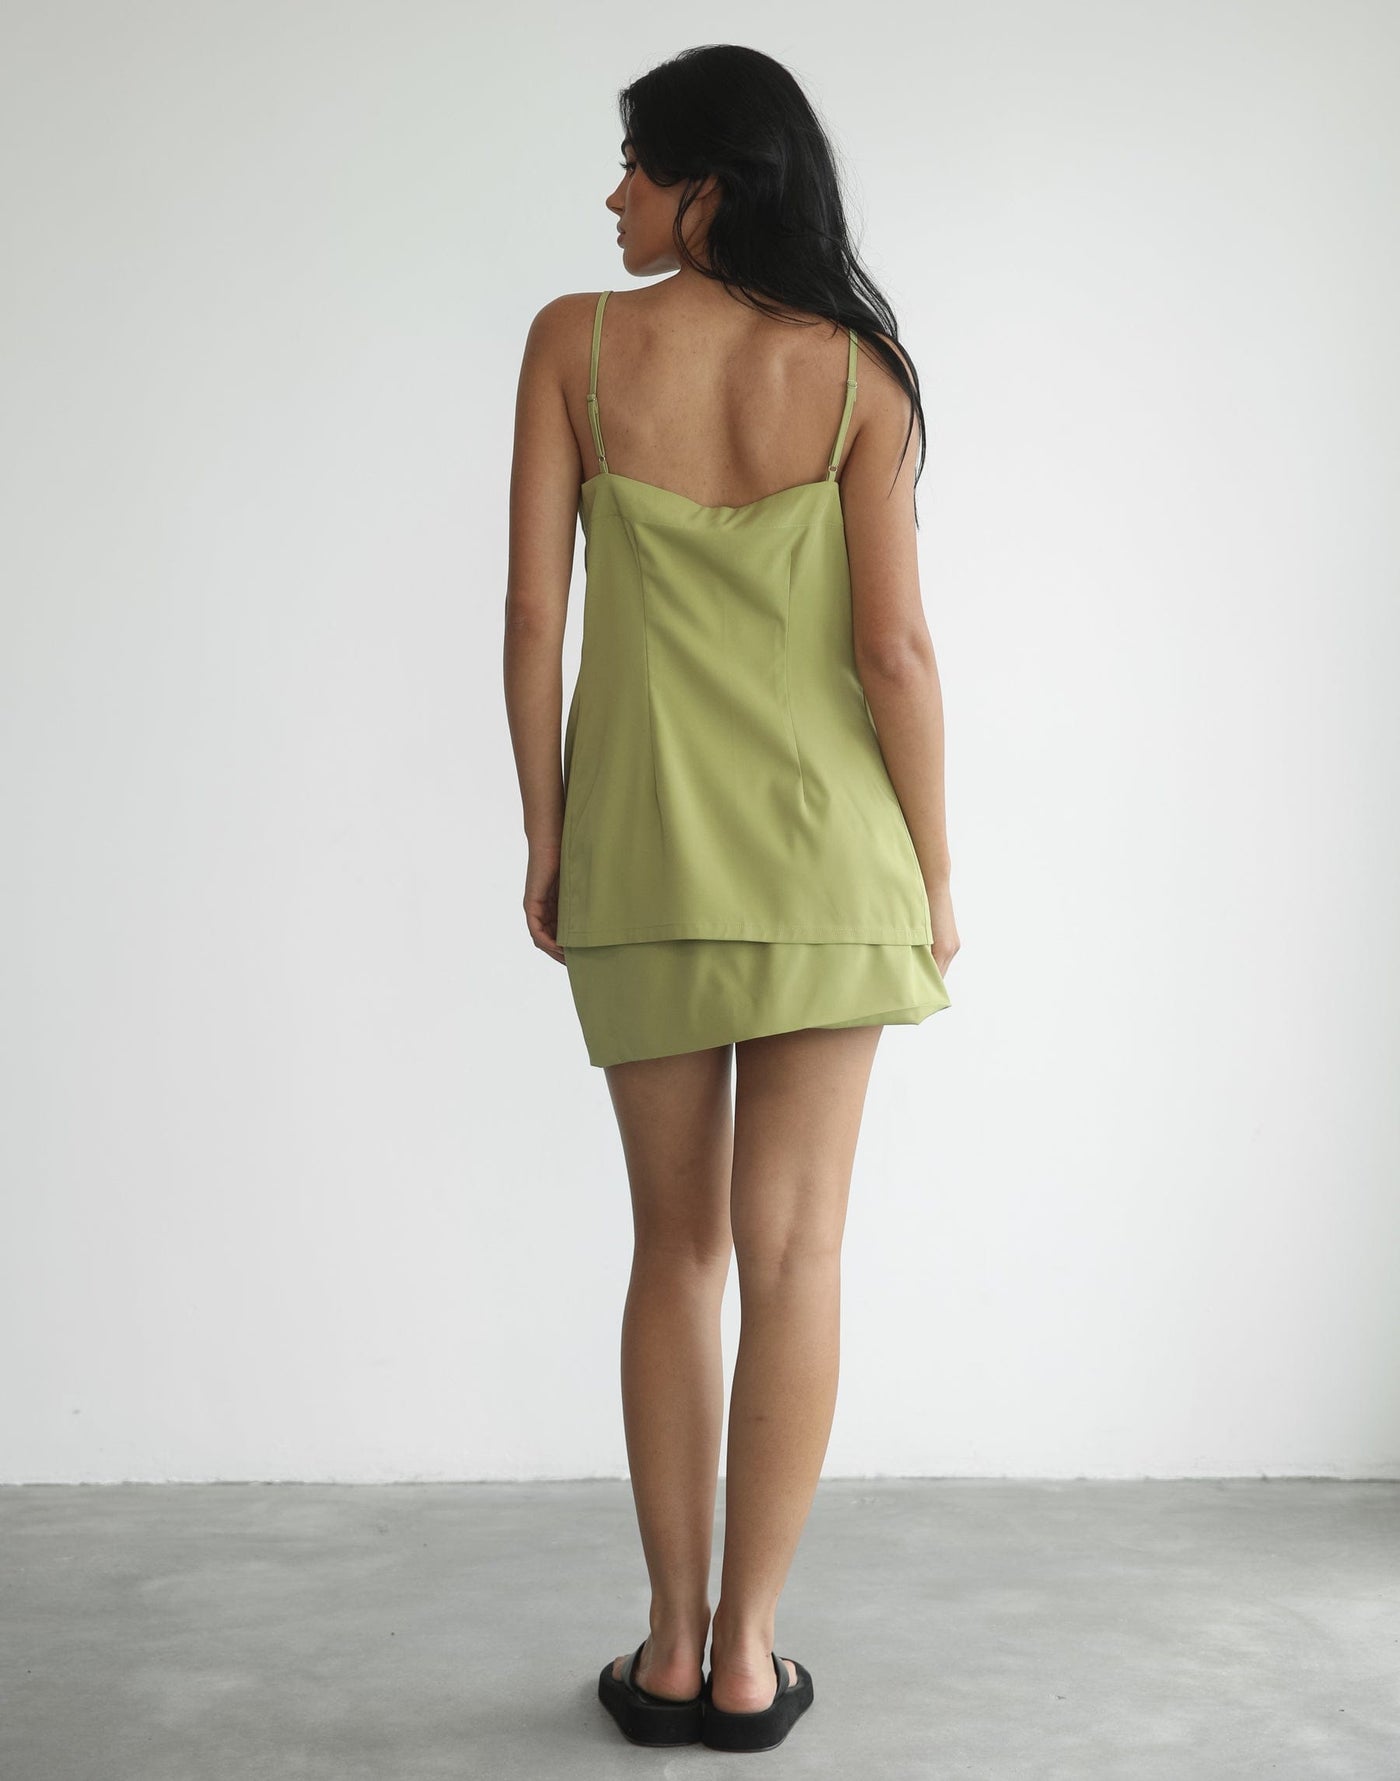 Orchid Mini Skirt (Olive) - Mid Waisted Mini Skirt - Women's Skirt - Charcoal Clothing